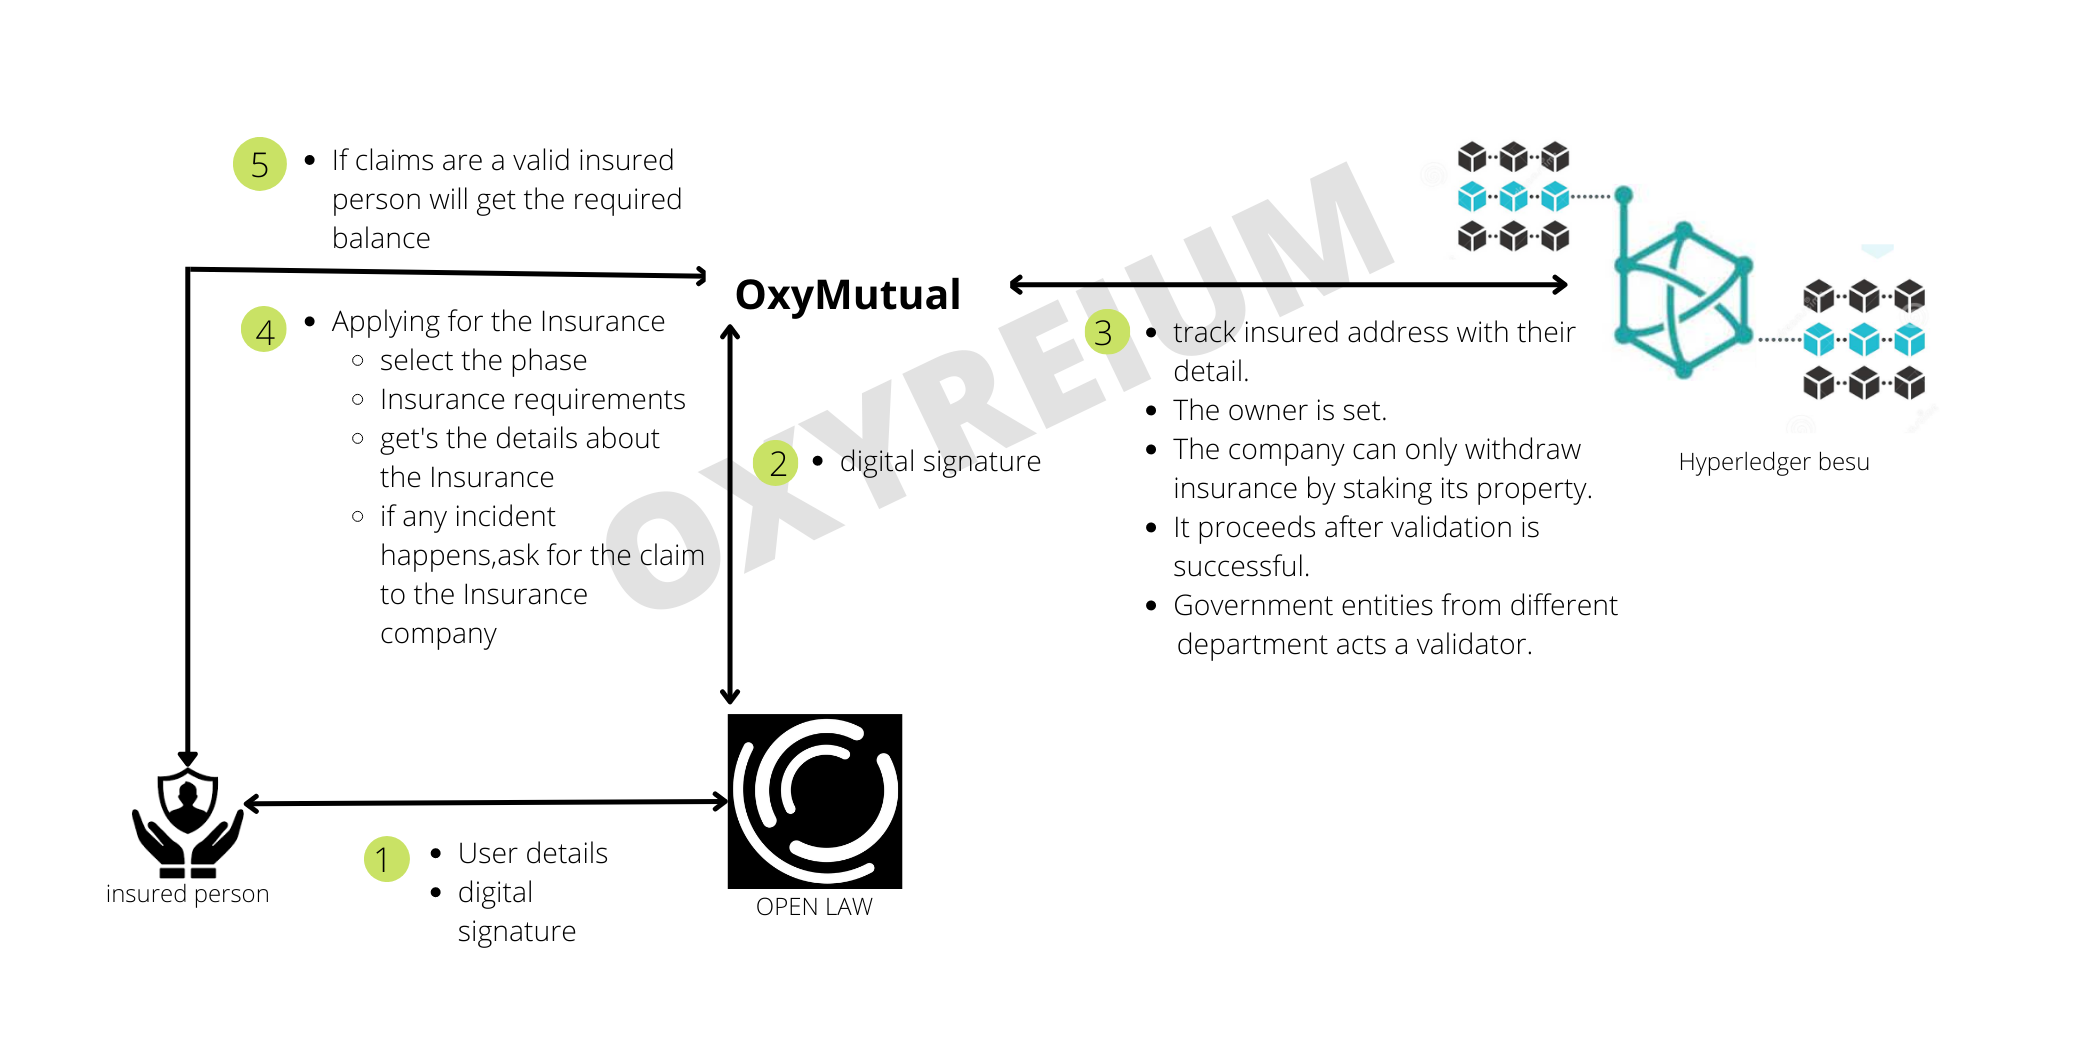 Architecture of OxyMutual